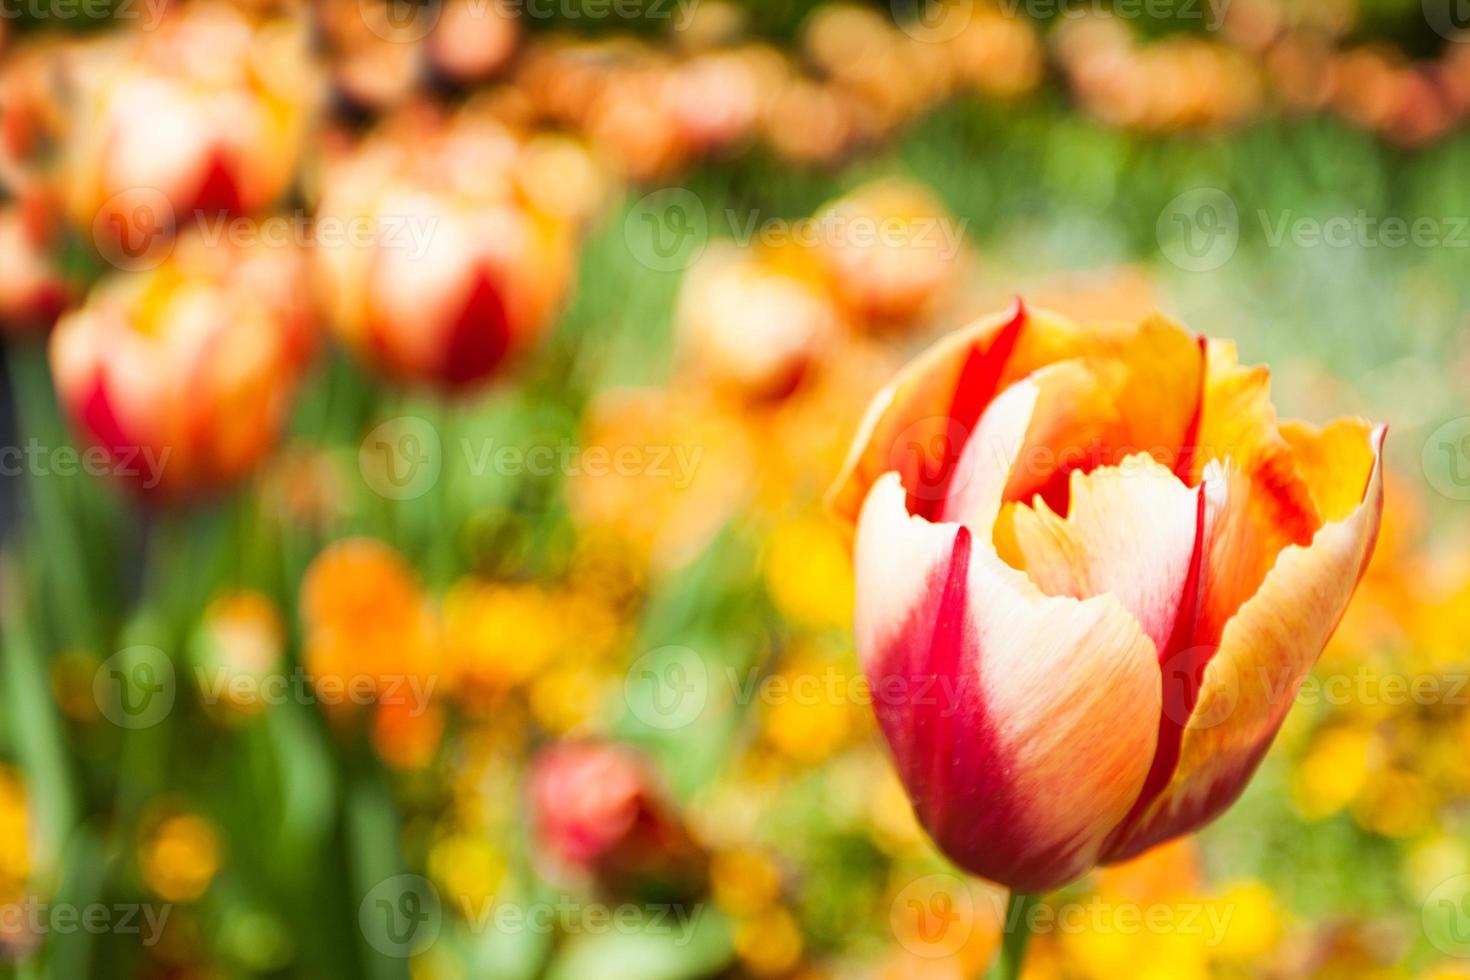 tulipa amarela vermelha foto